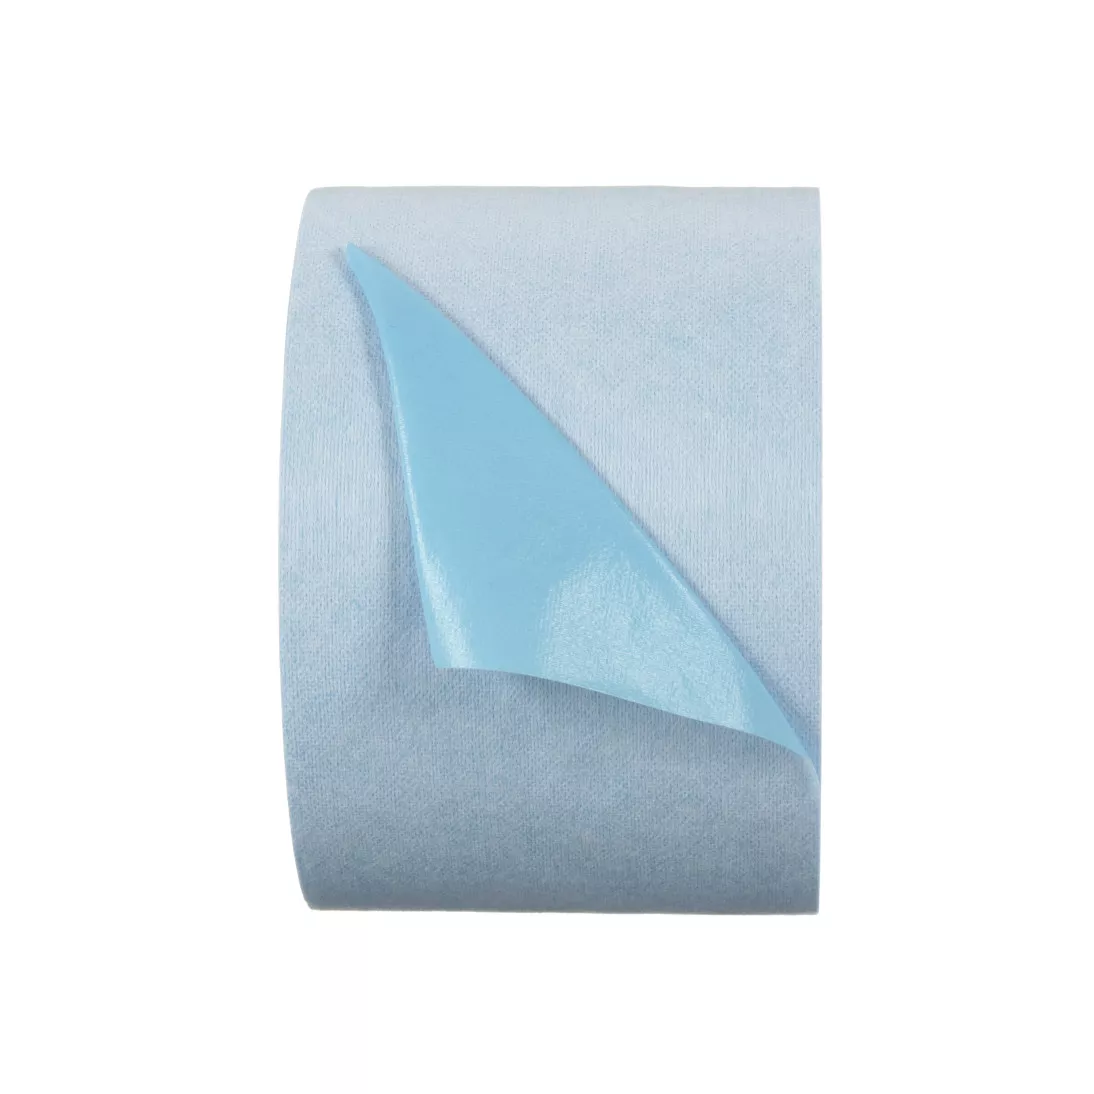 3M™ Self-Stick Liquid Protection Fabric, 36877, Blue, 6 in x 300 ft per
roll, 4 roll pack, 1 pack per case